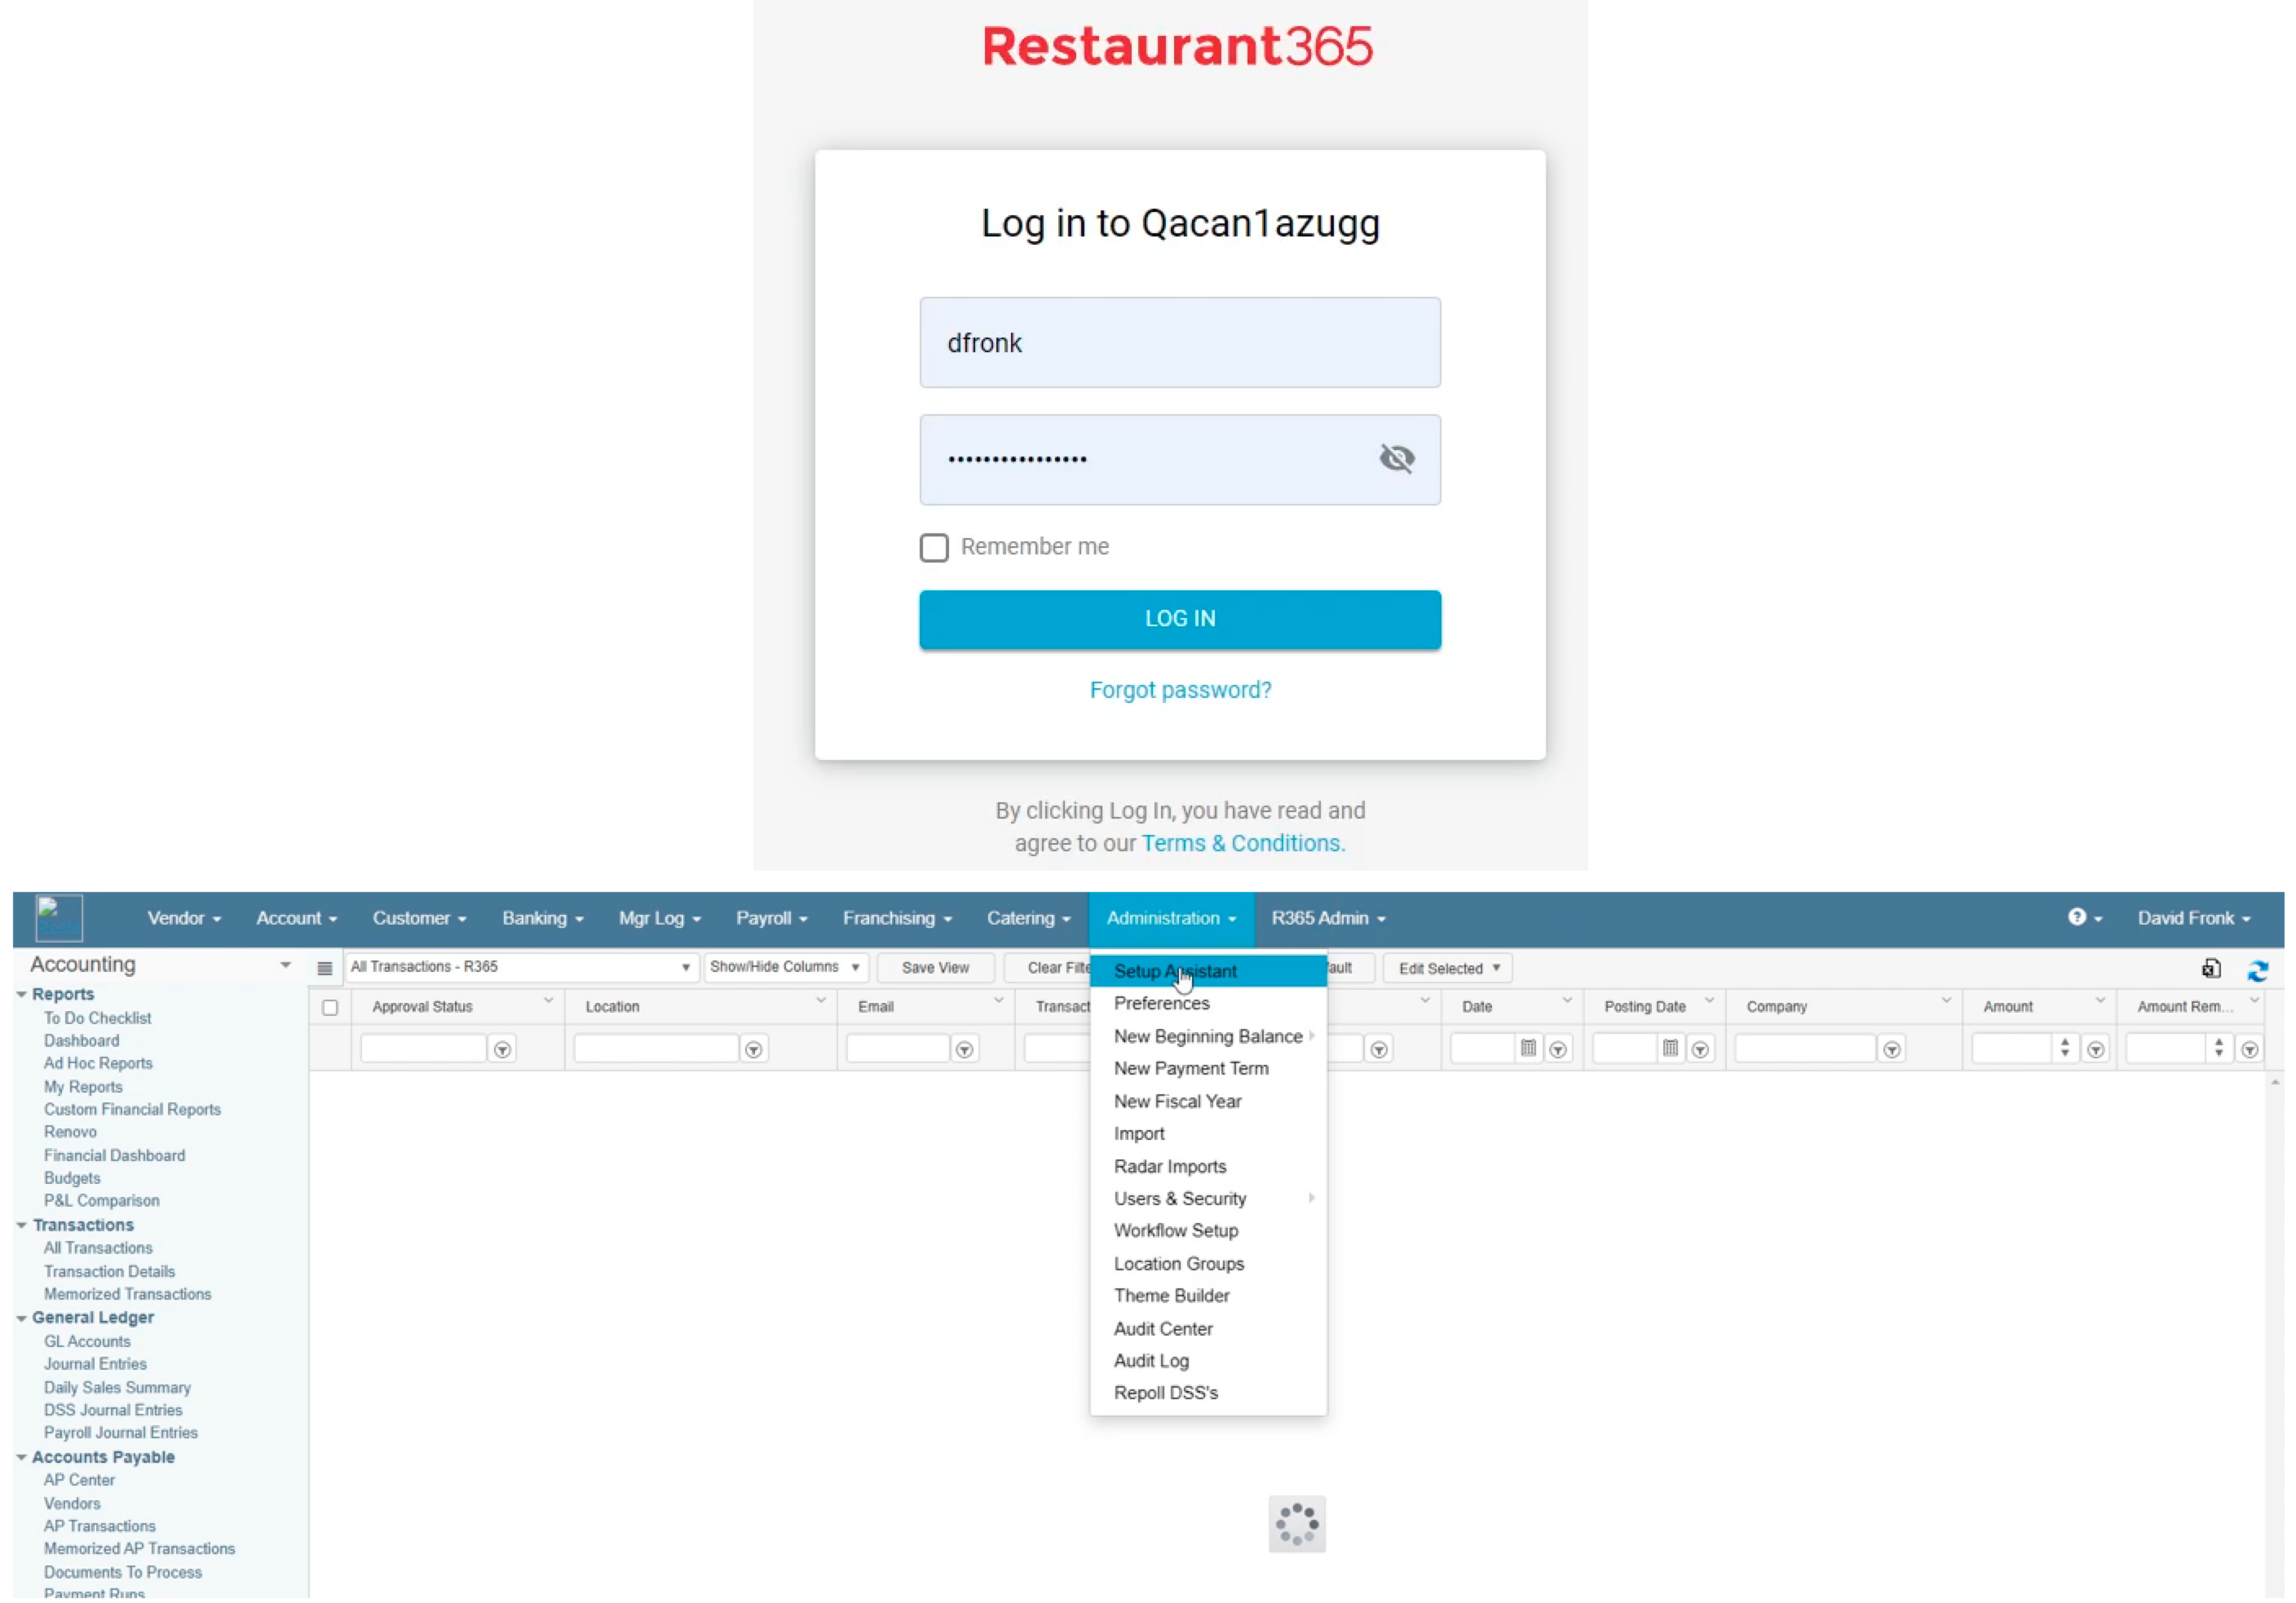 OpenTable – Restaurant365